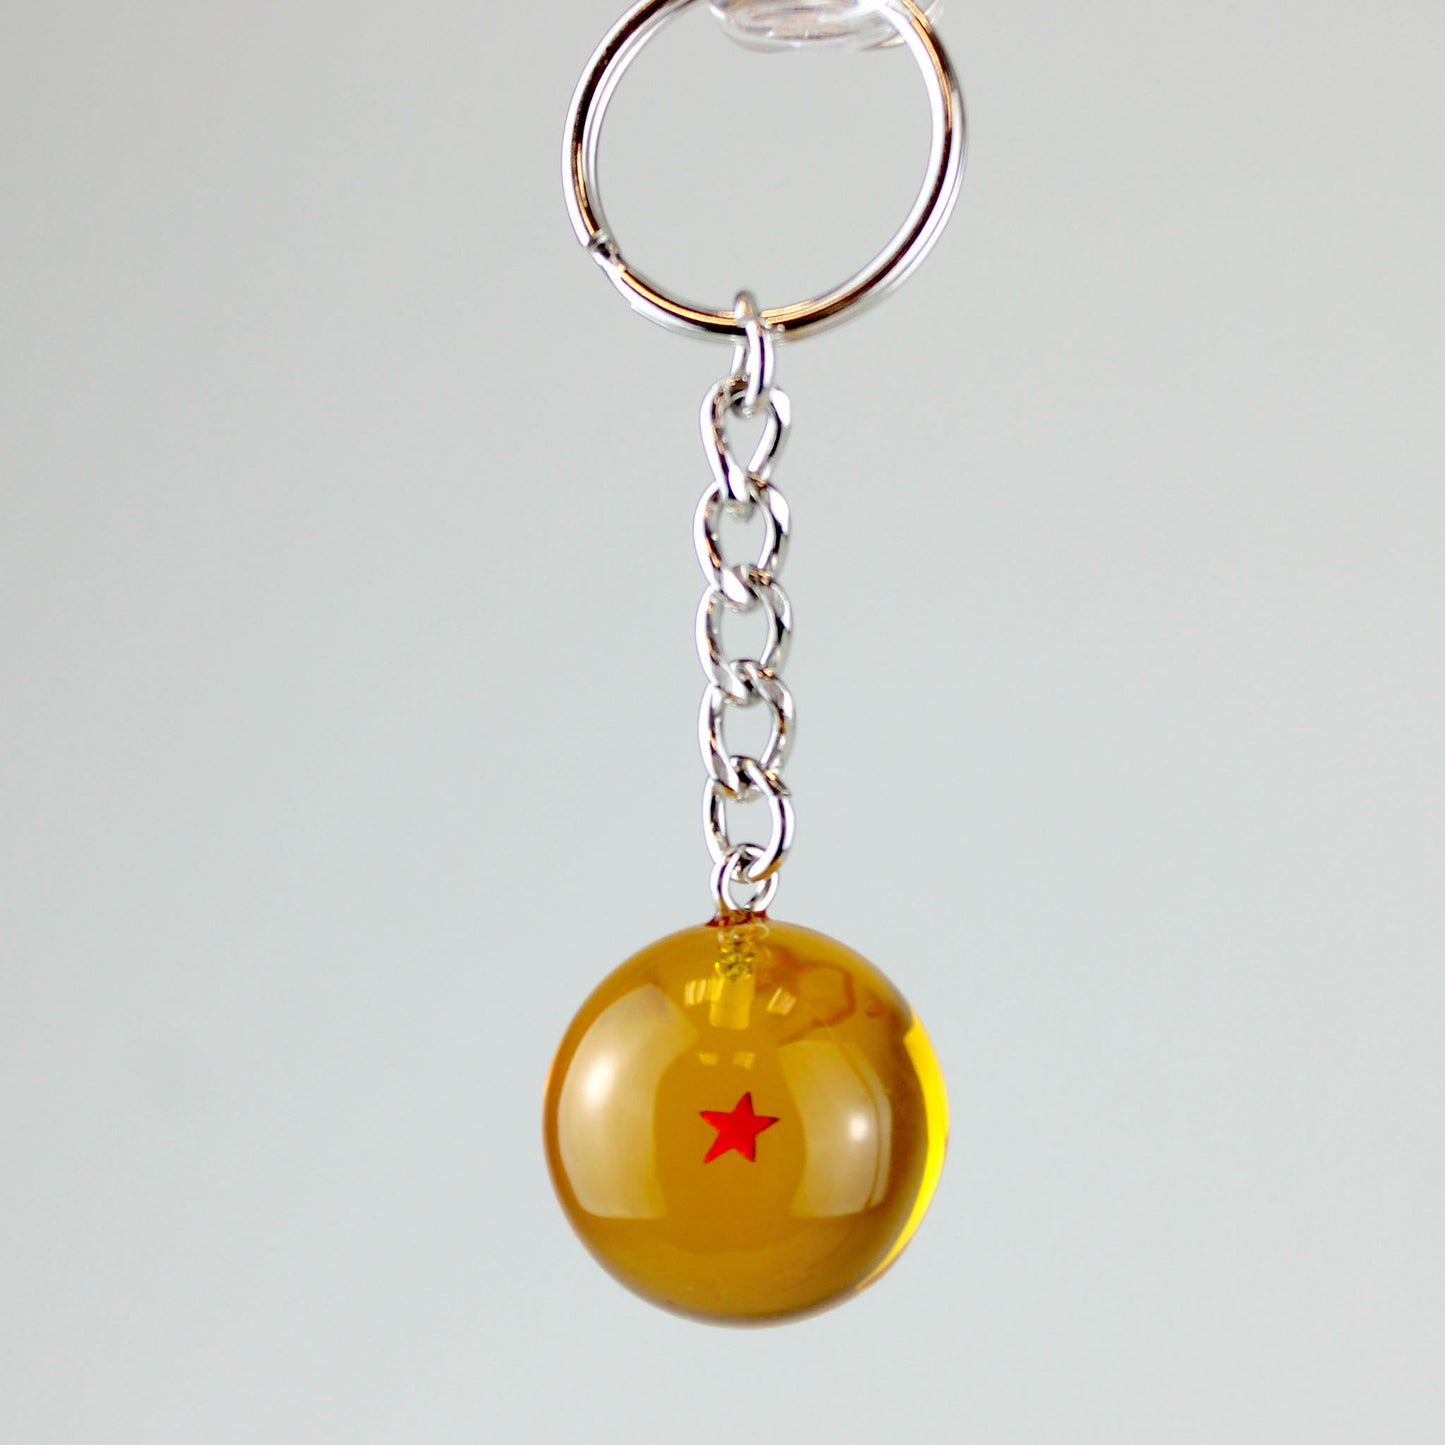 One Star Dragon Ball (Dragon Ball Z) Acrylic Mini Replica Keychain